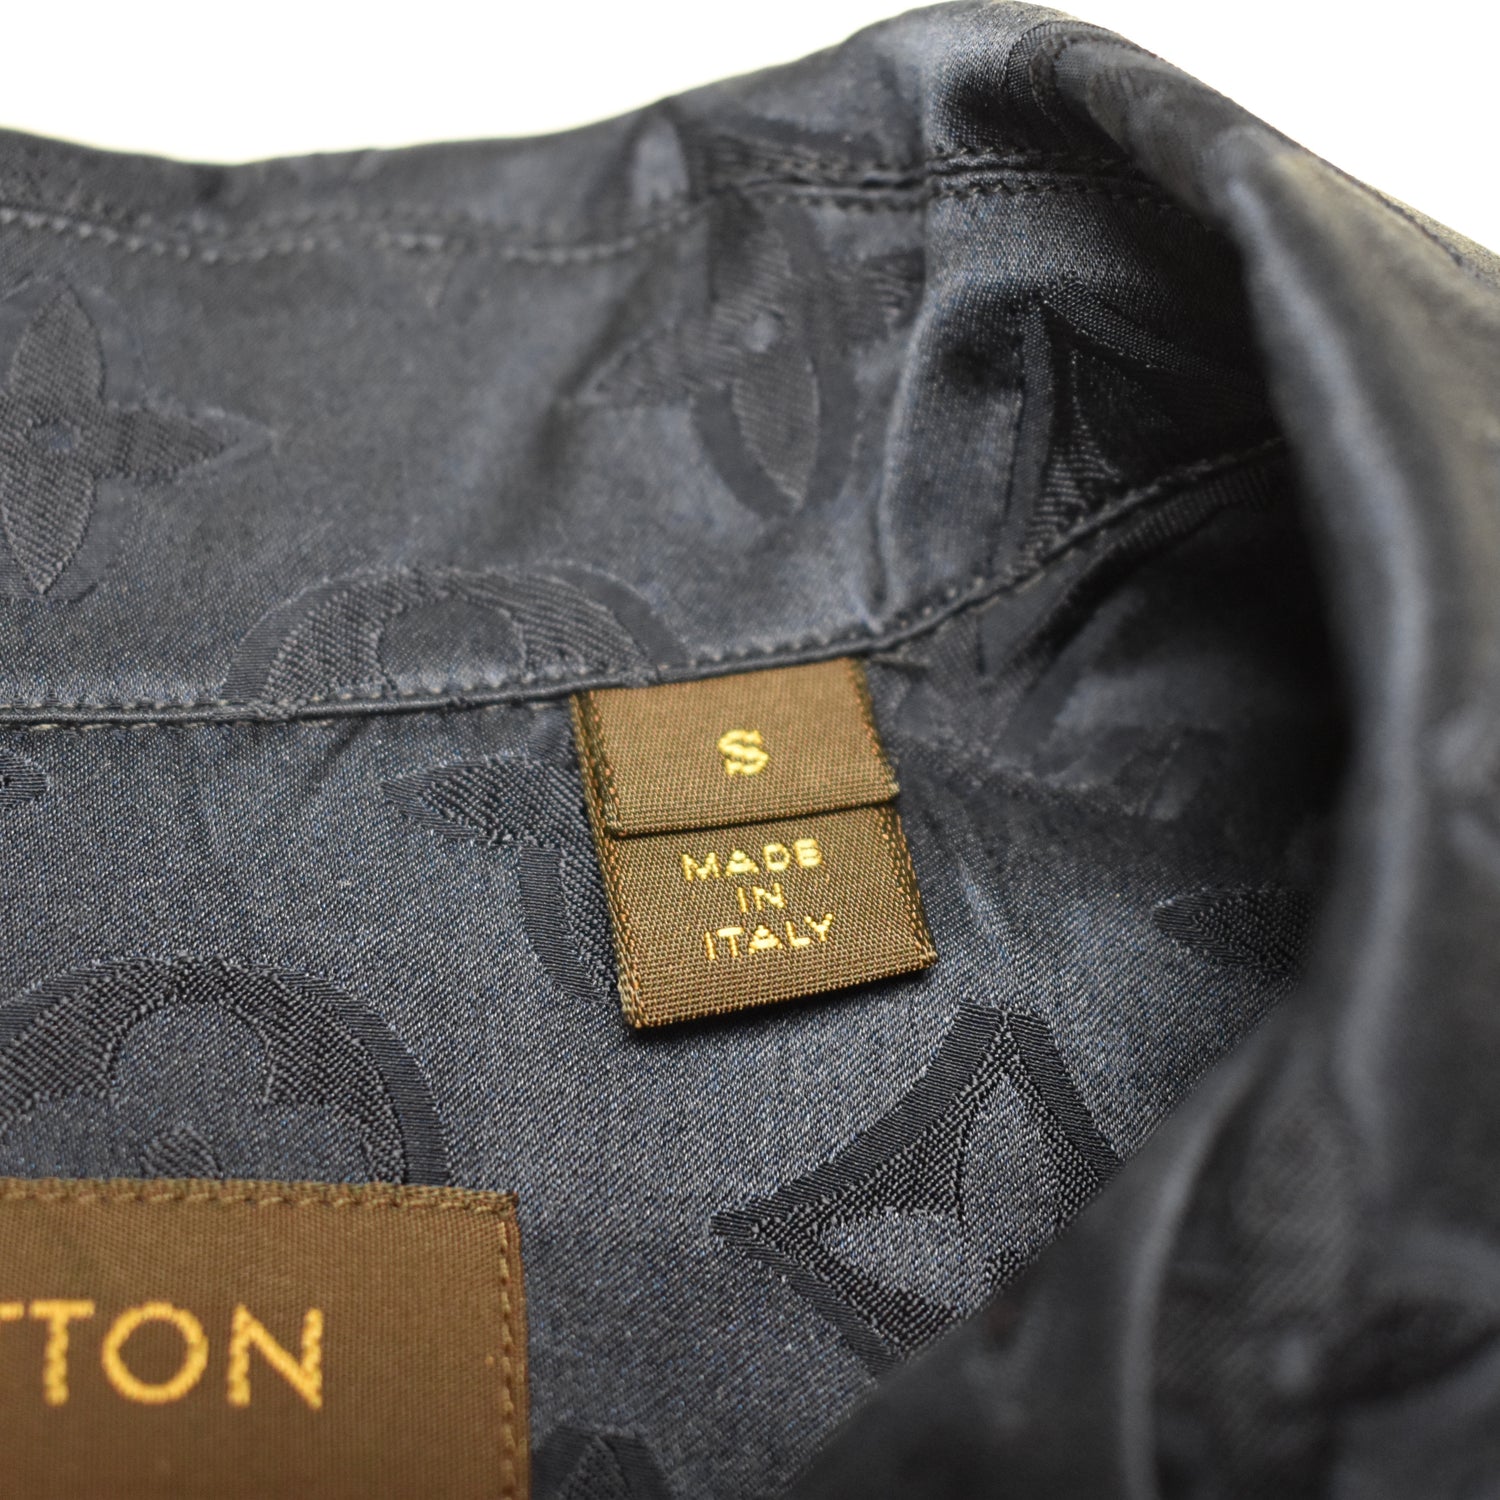 Louis Vuitton x Supreme Jacquard Silk Pajama Shirt | Size S, Apparel